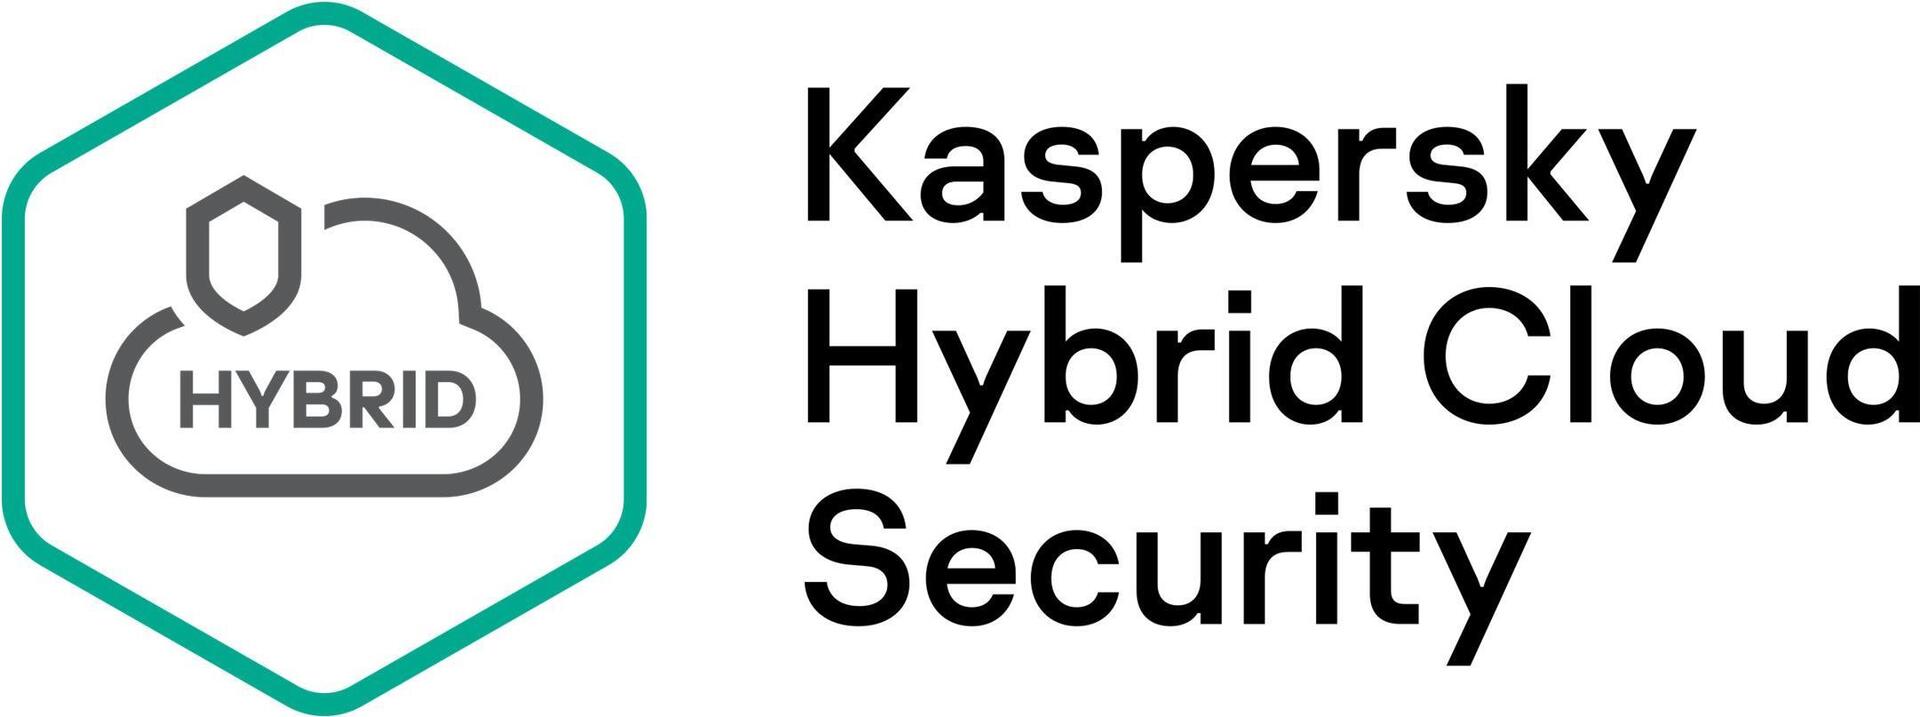 Kaspersky Hybrid Cloud Security Desktop (KL4155XANT9)